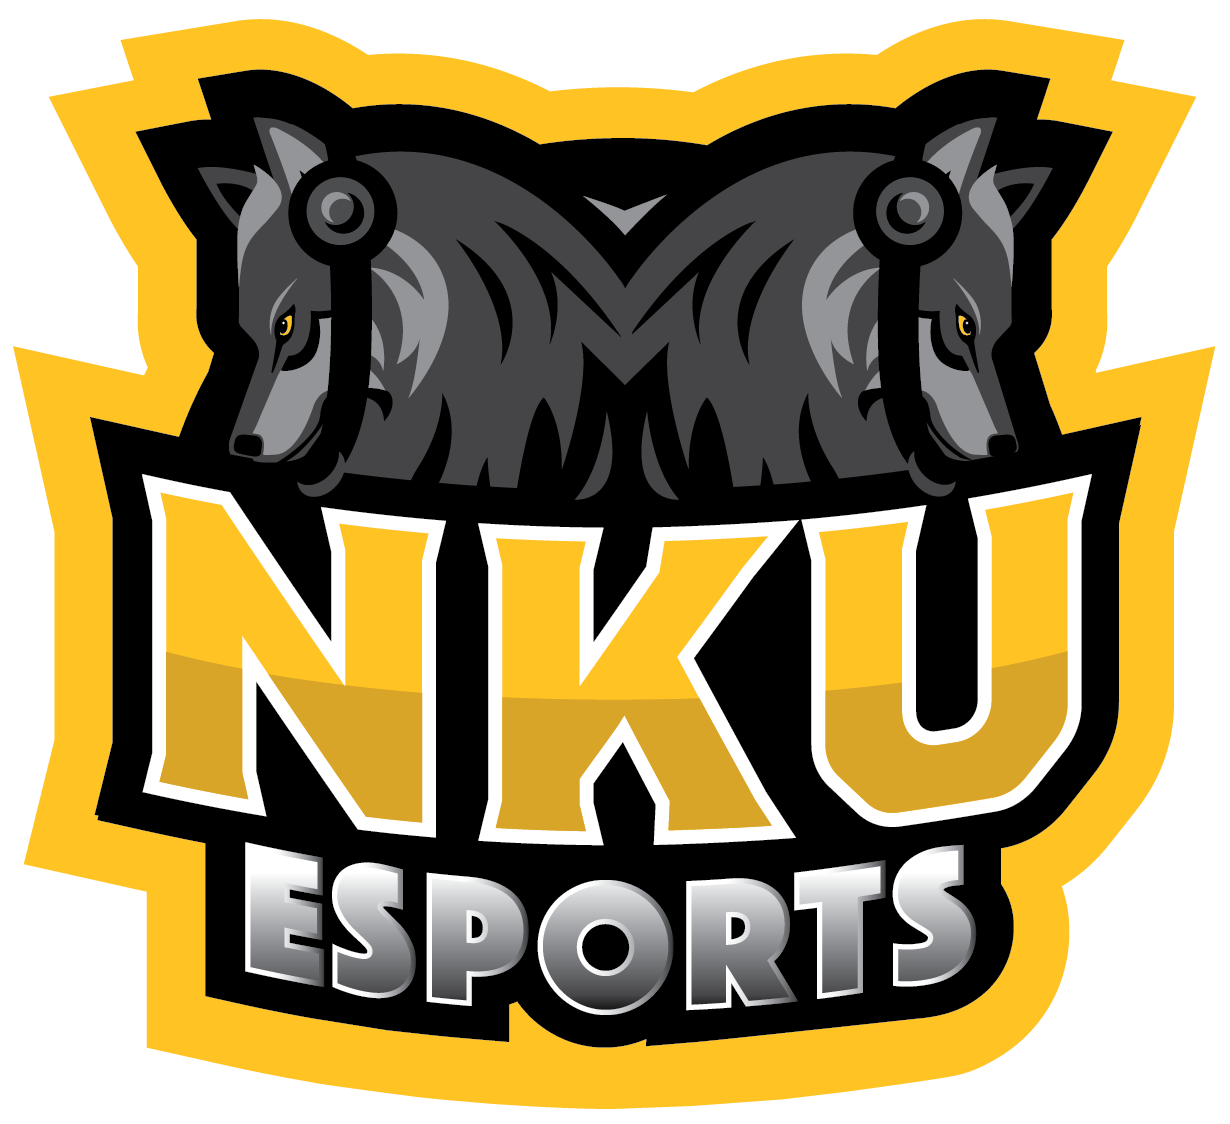 NKU Esports logo